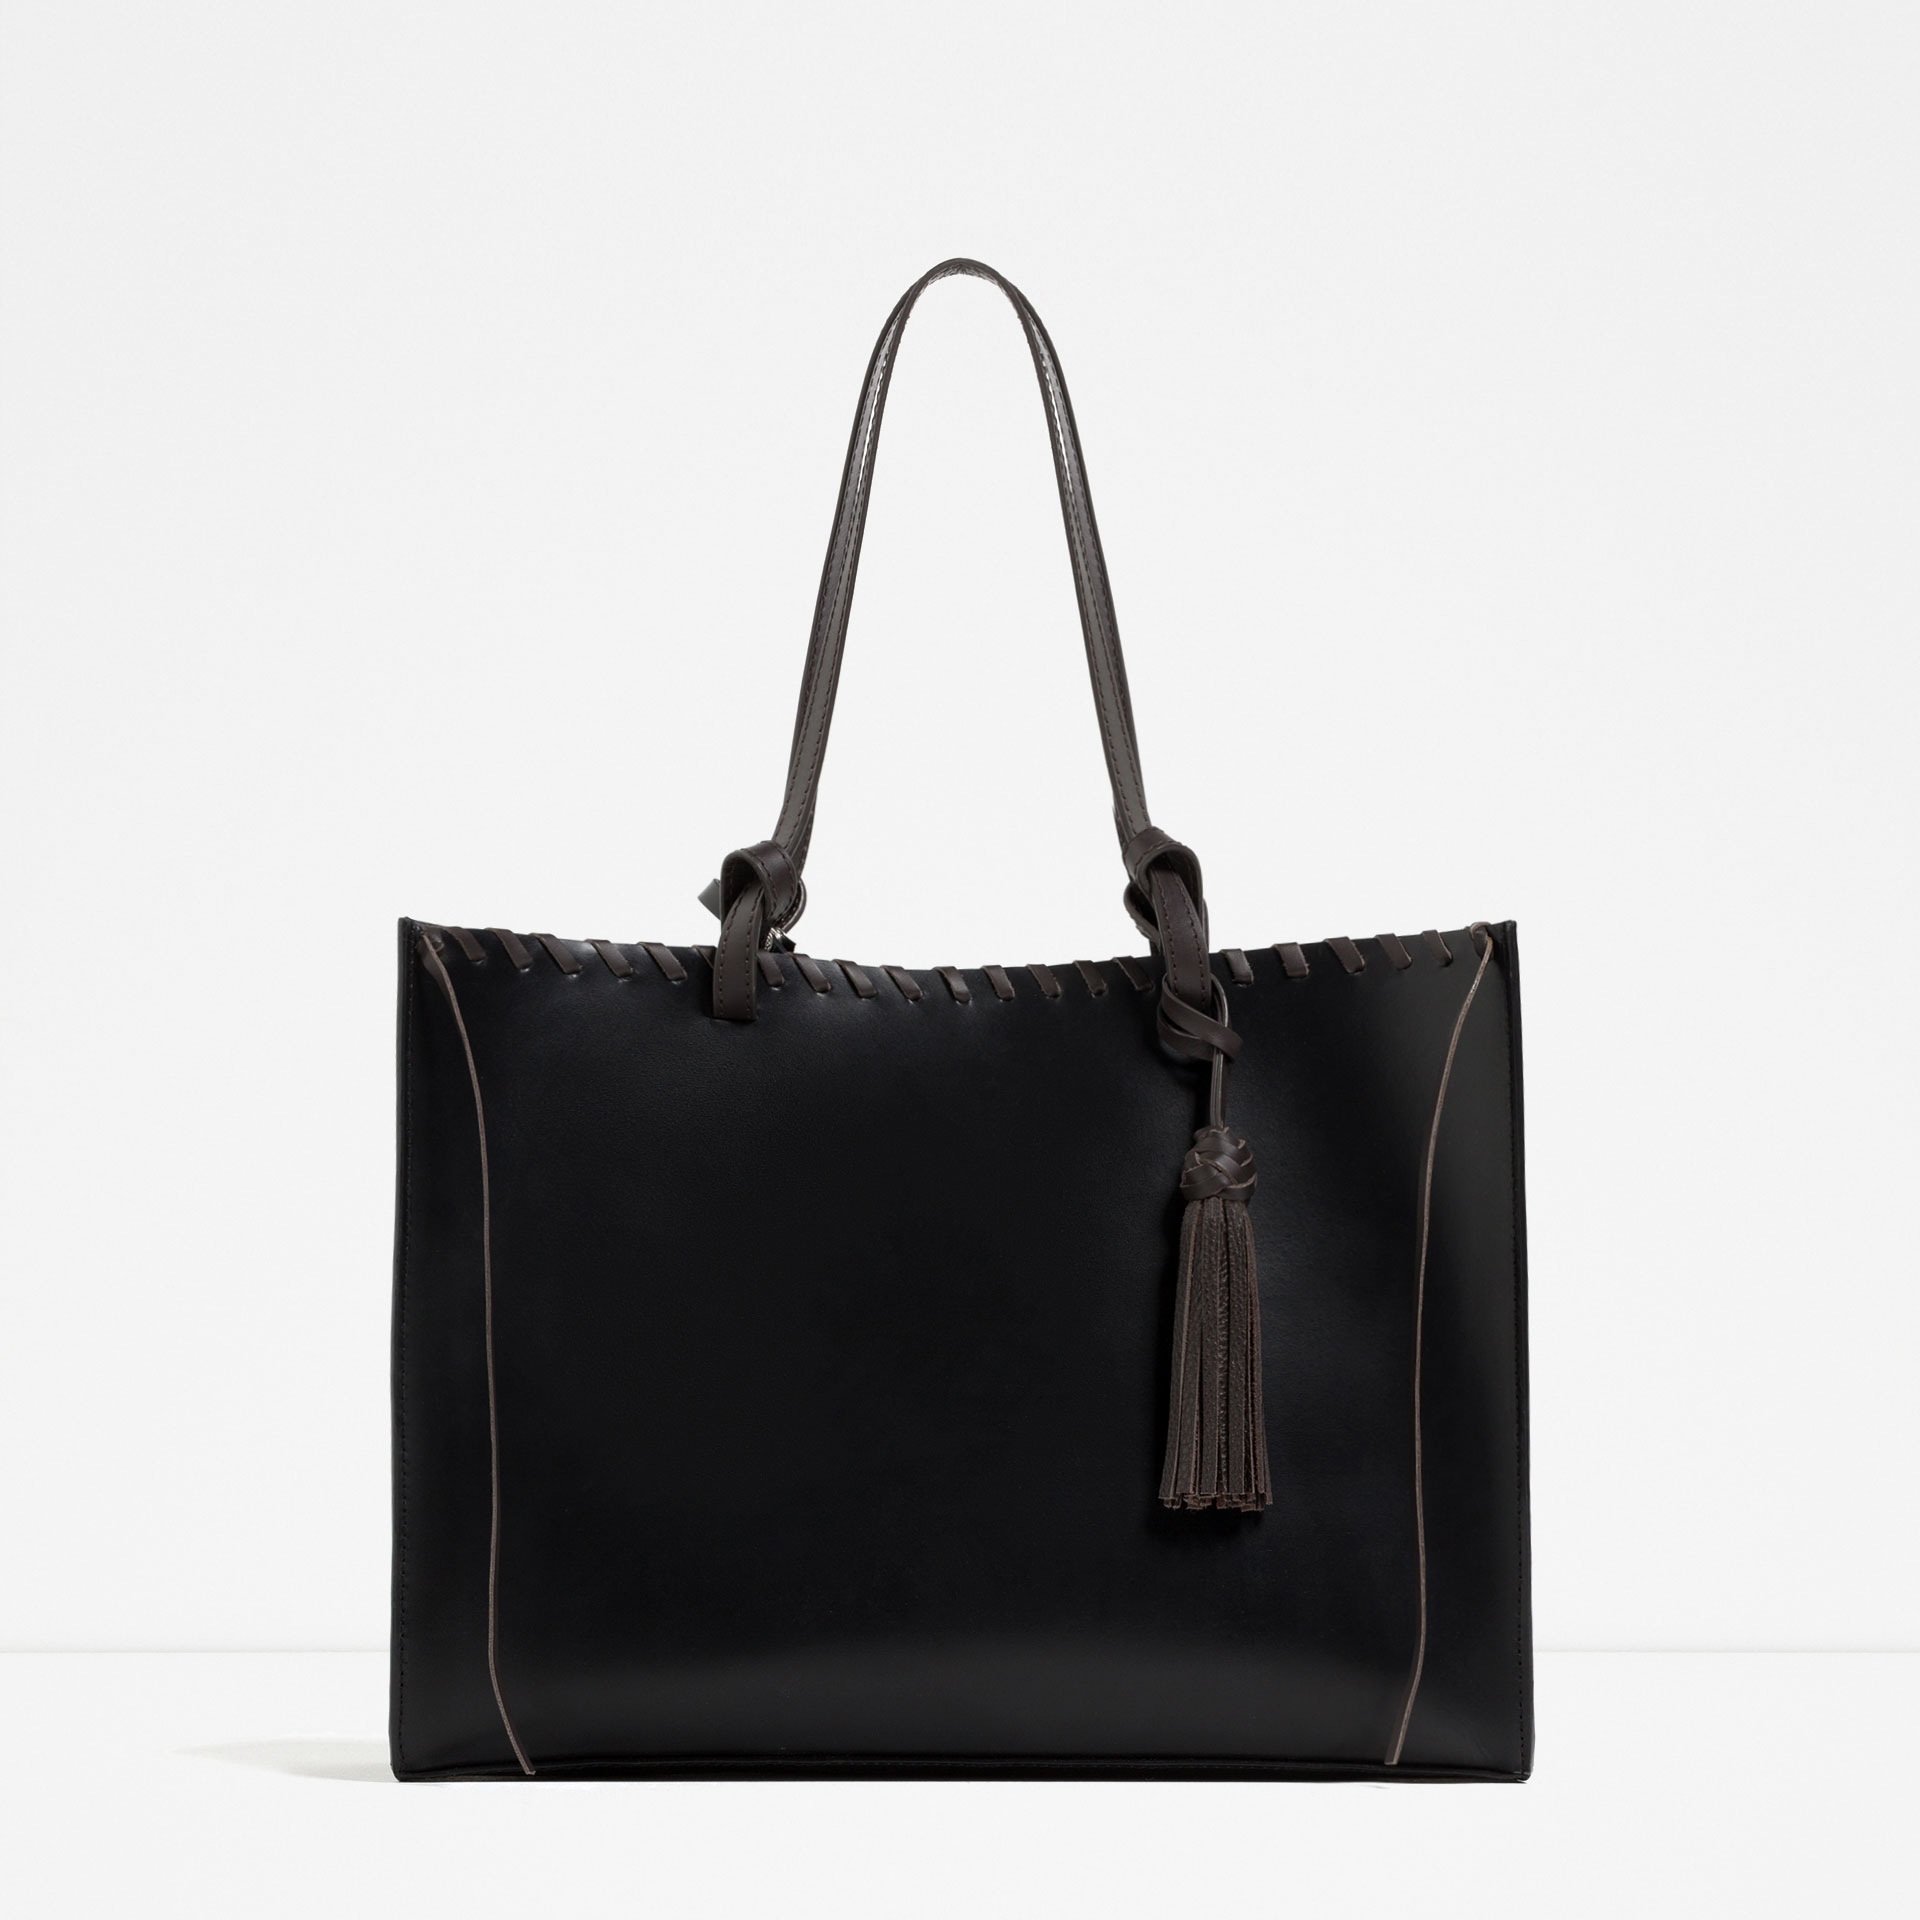 Zara Tasselled Leather Tote in Black | Lyst